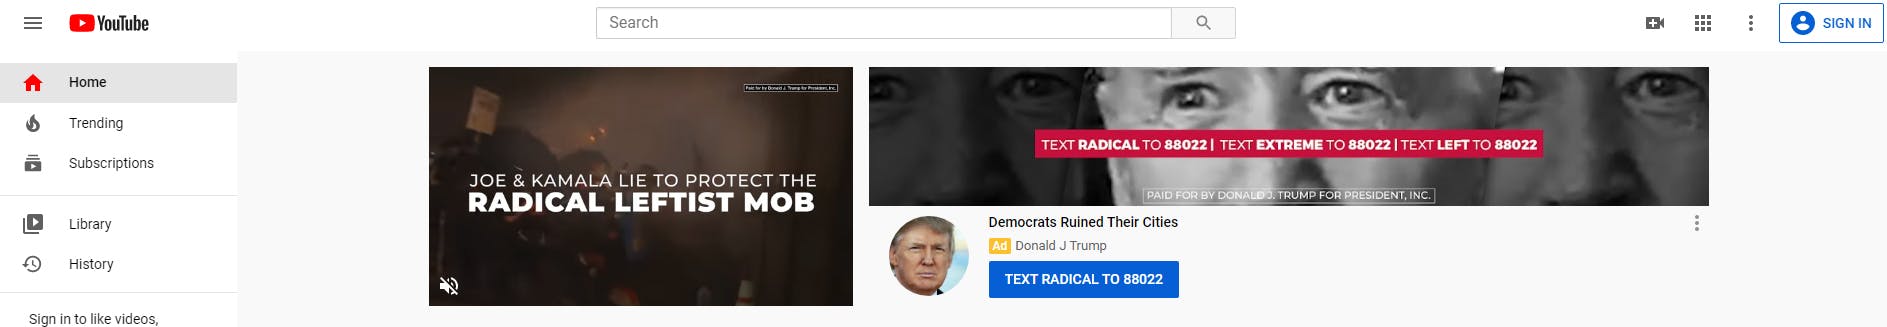 Trump YouTube Banner Ad